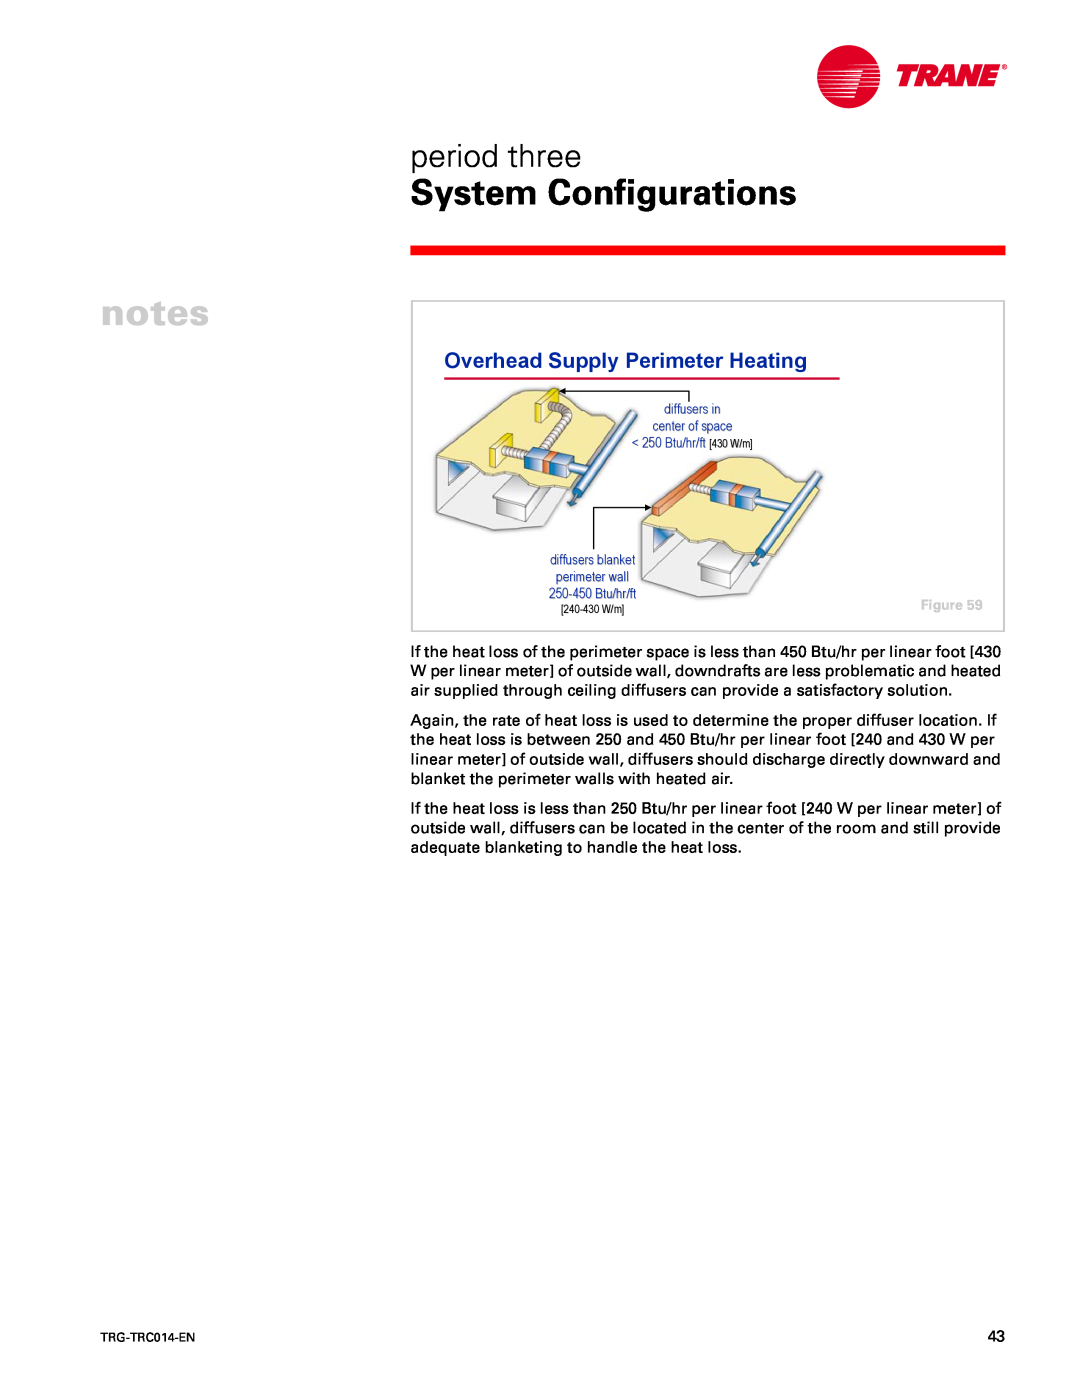 Trane TRG-TRC014-EN manual Overhead Supply Perimeter Heating, System Configurations, period three 